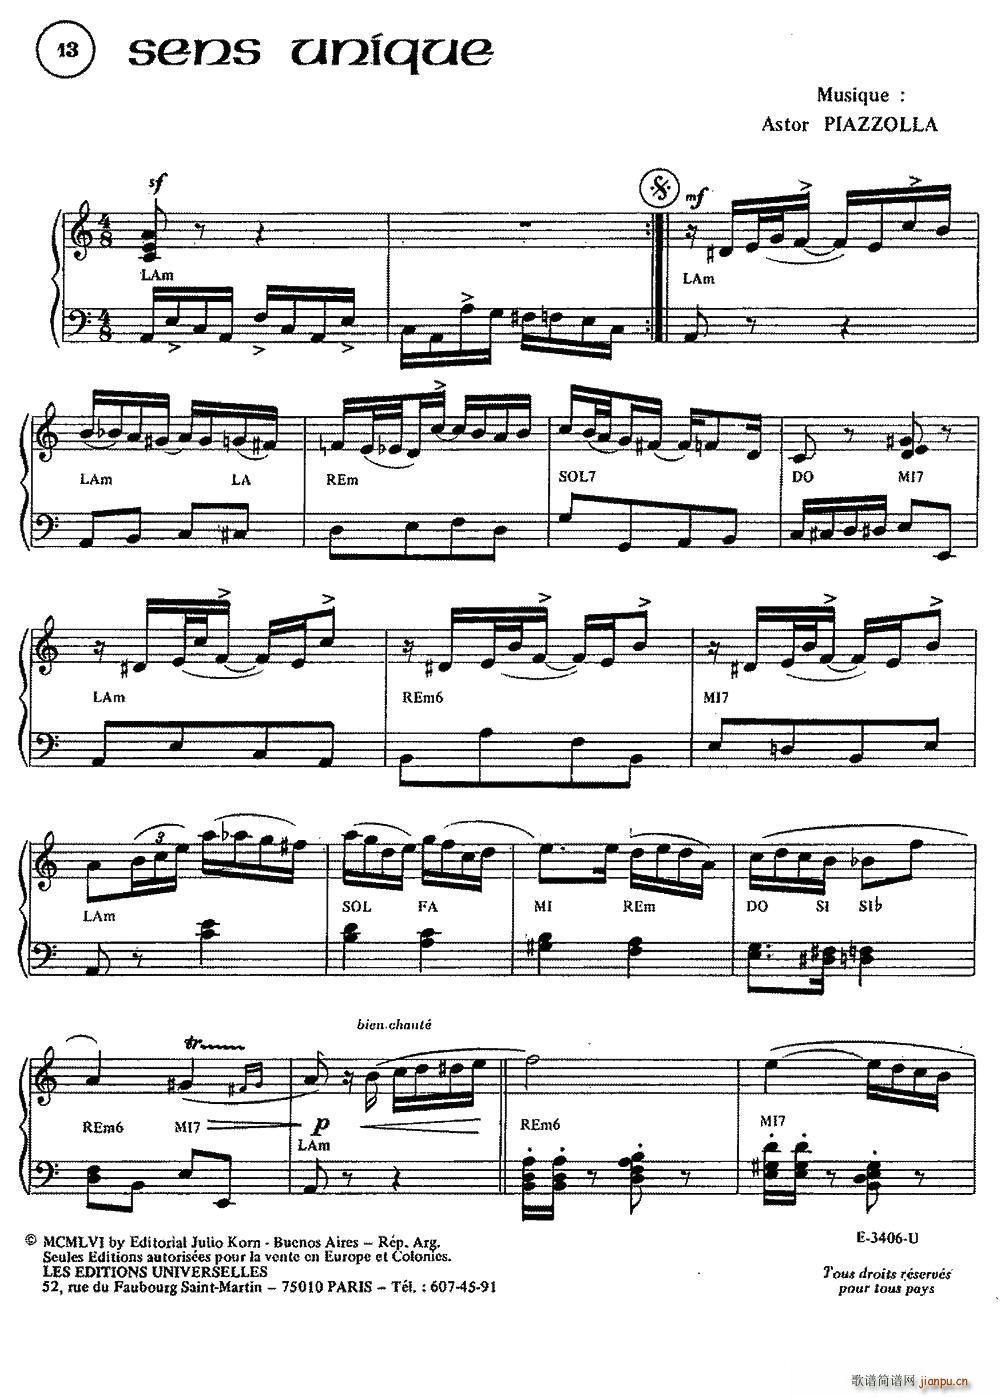 Piazzolla合集 13 Sens Unique(手风琴谱)1